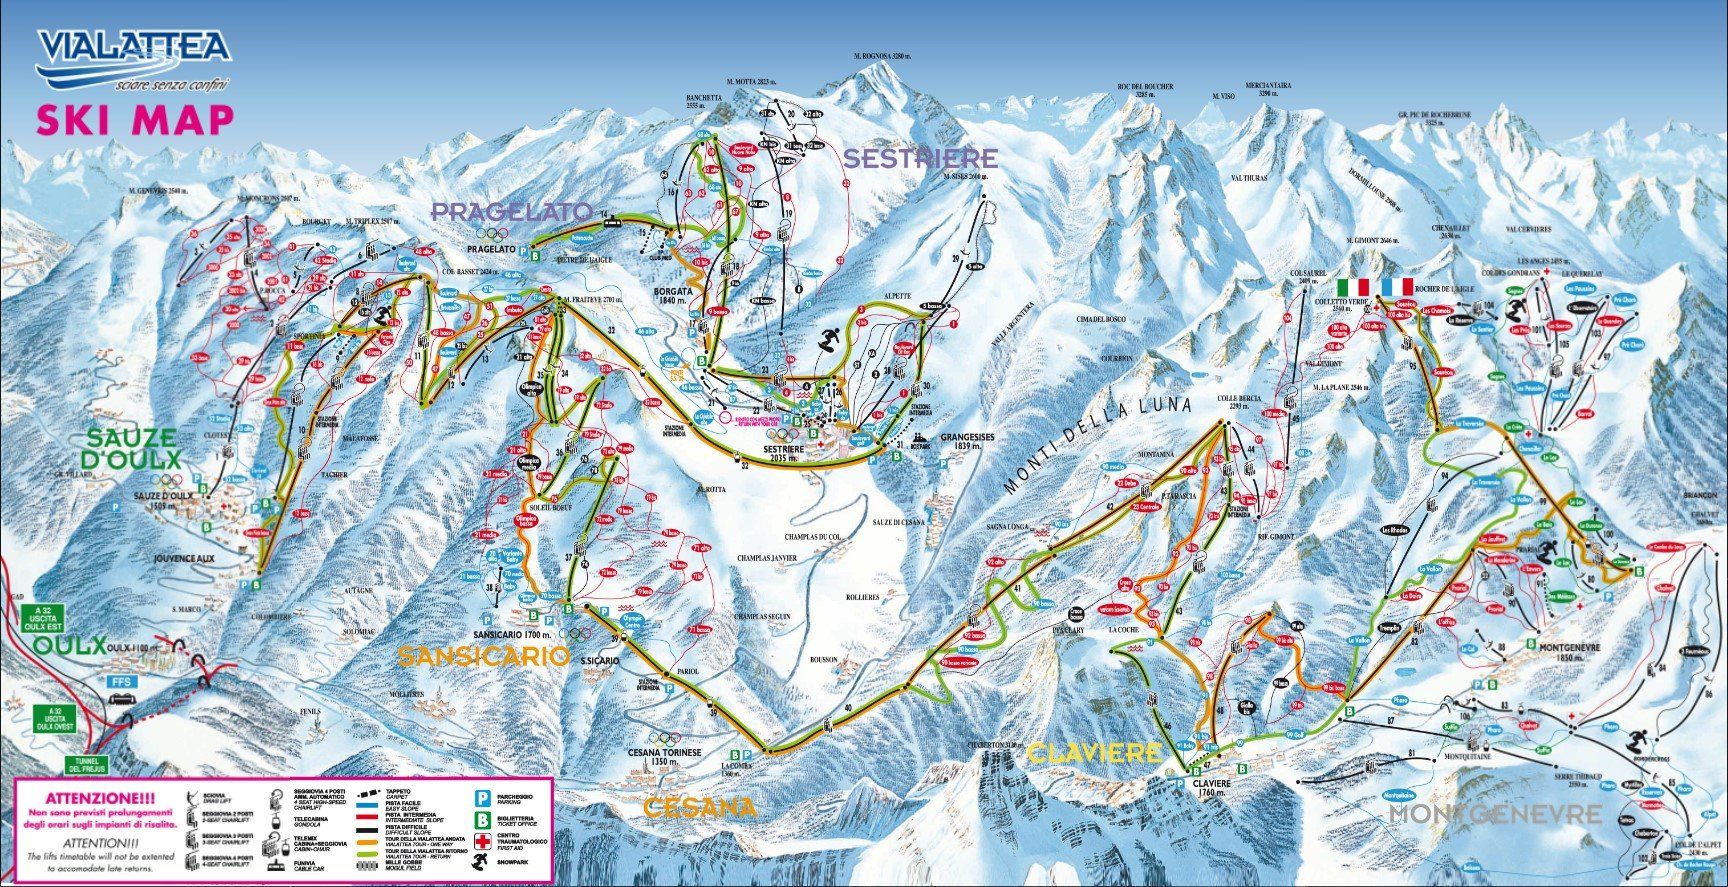 Pistenplan / Karte Skigebiet Sauze d'Oulx (Via Lattea), 